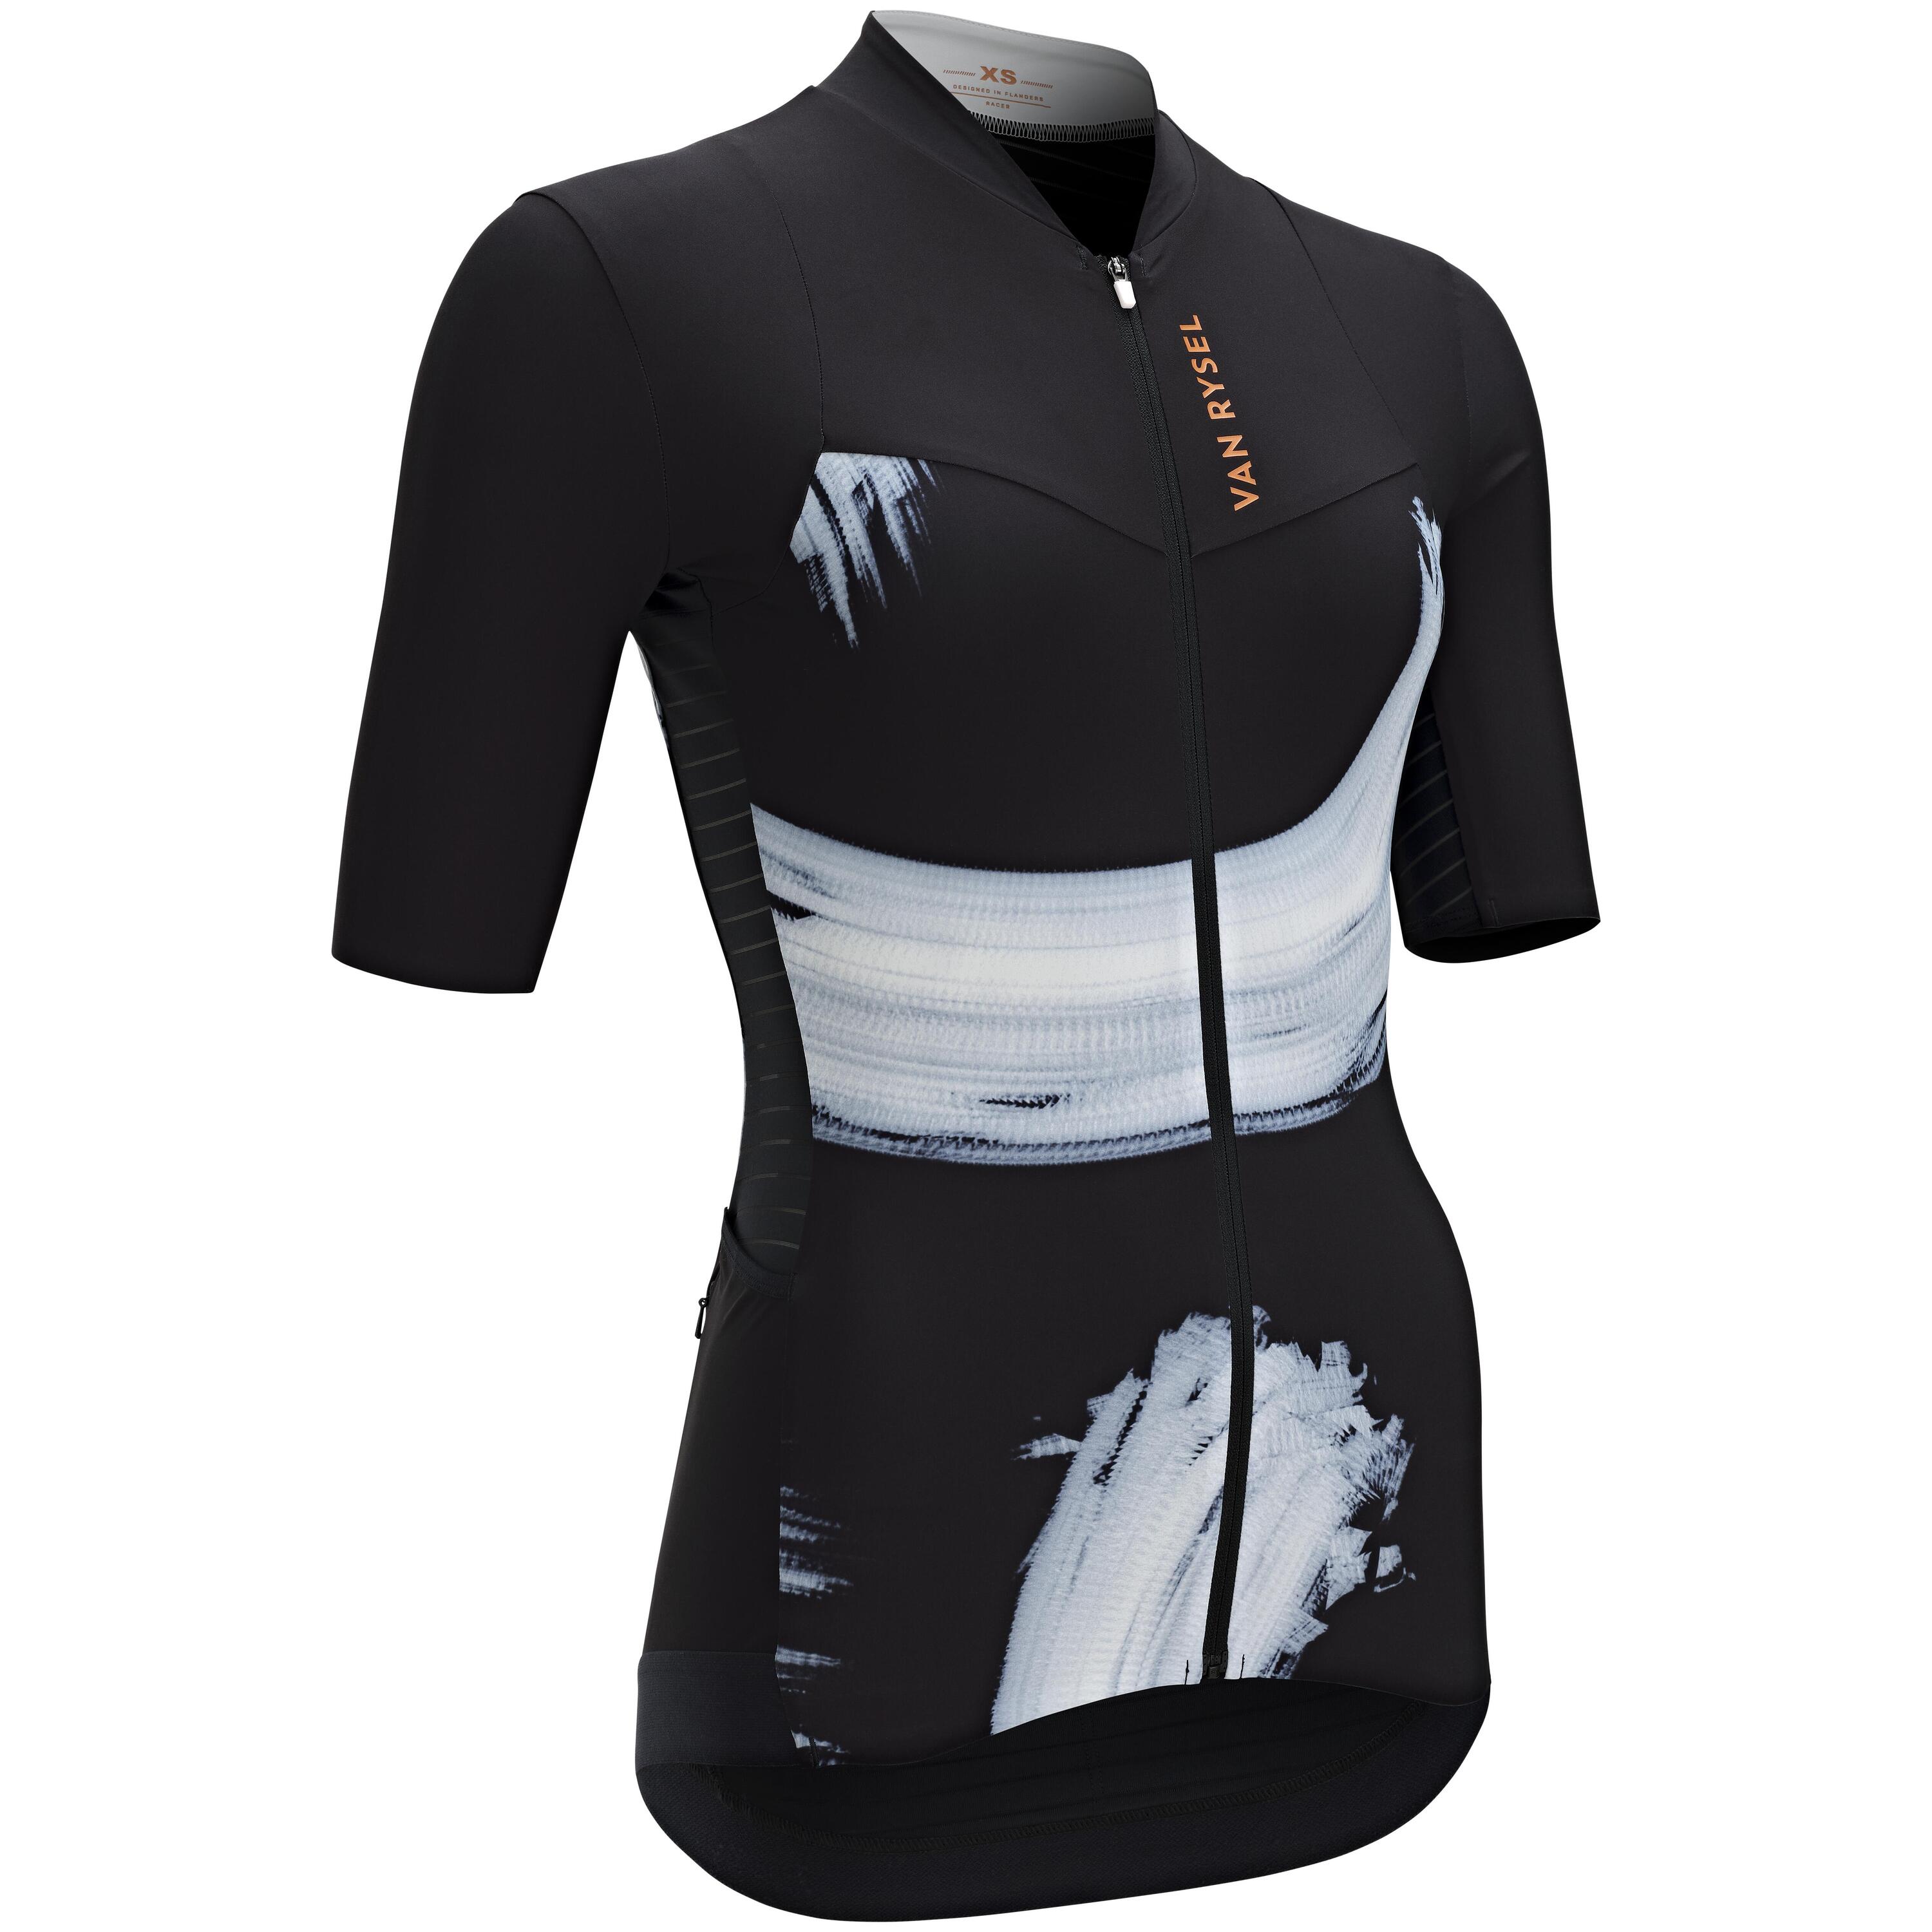 Women's Short-Sleeved Road Cycling Jersey Racer - Black Brush 1/6